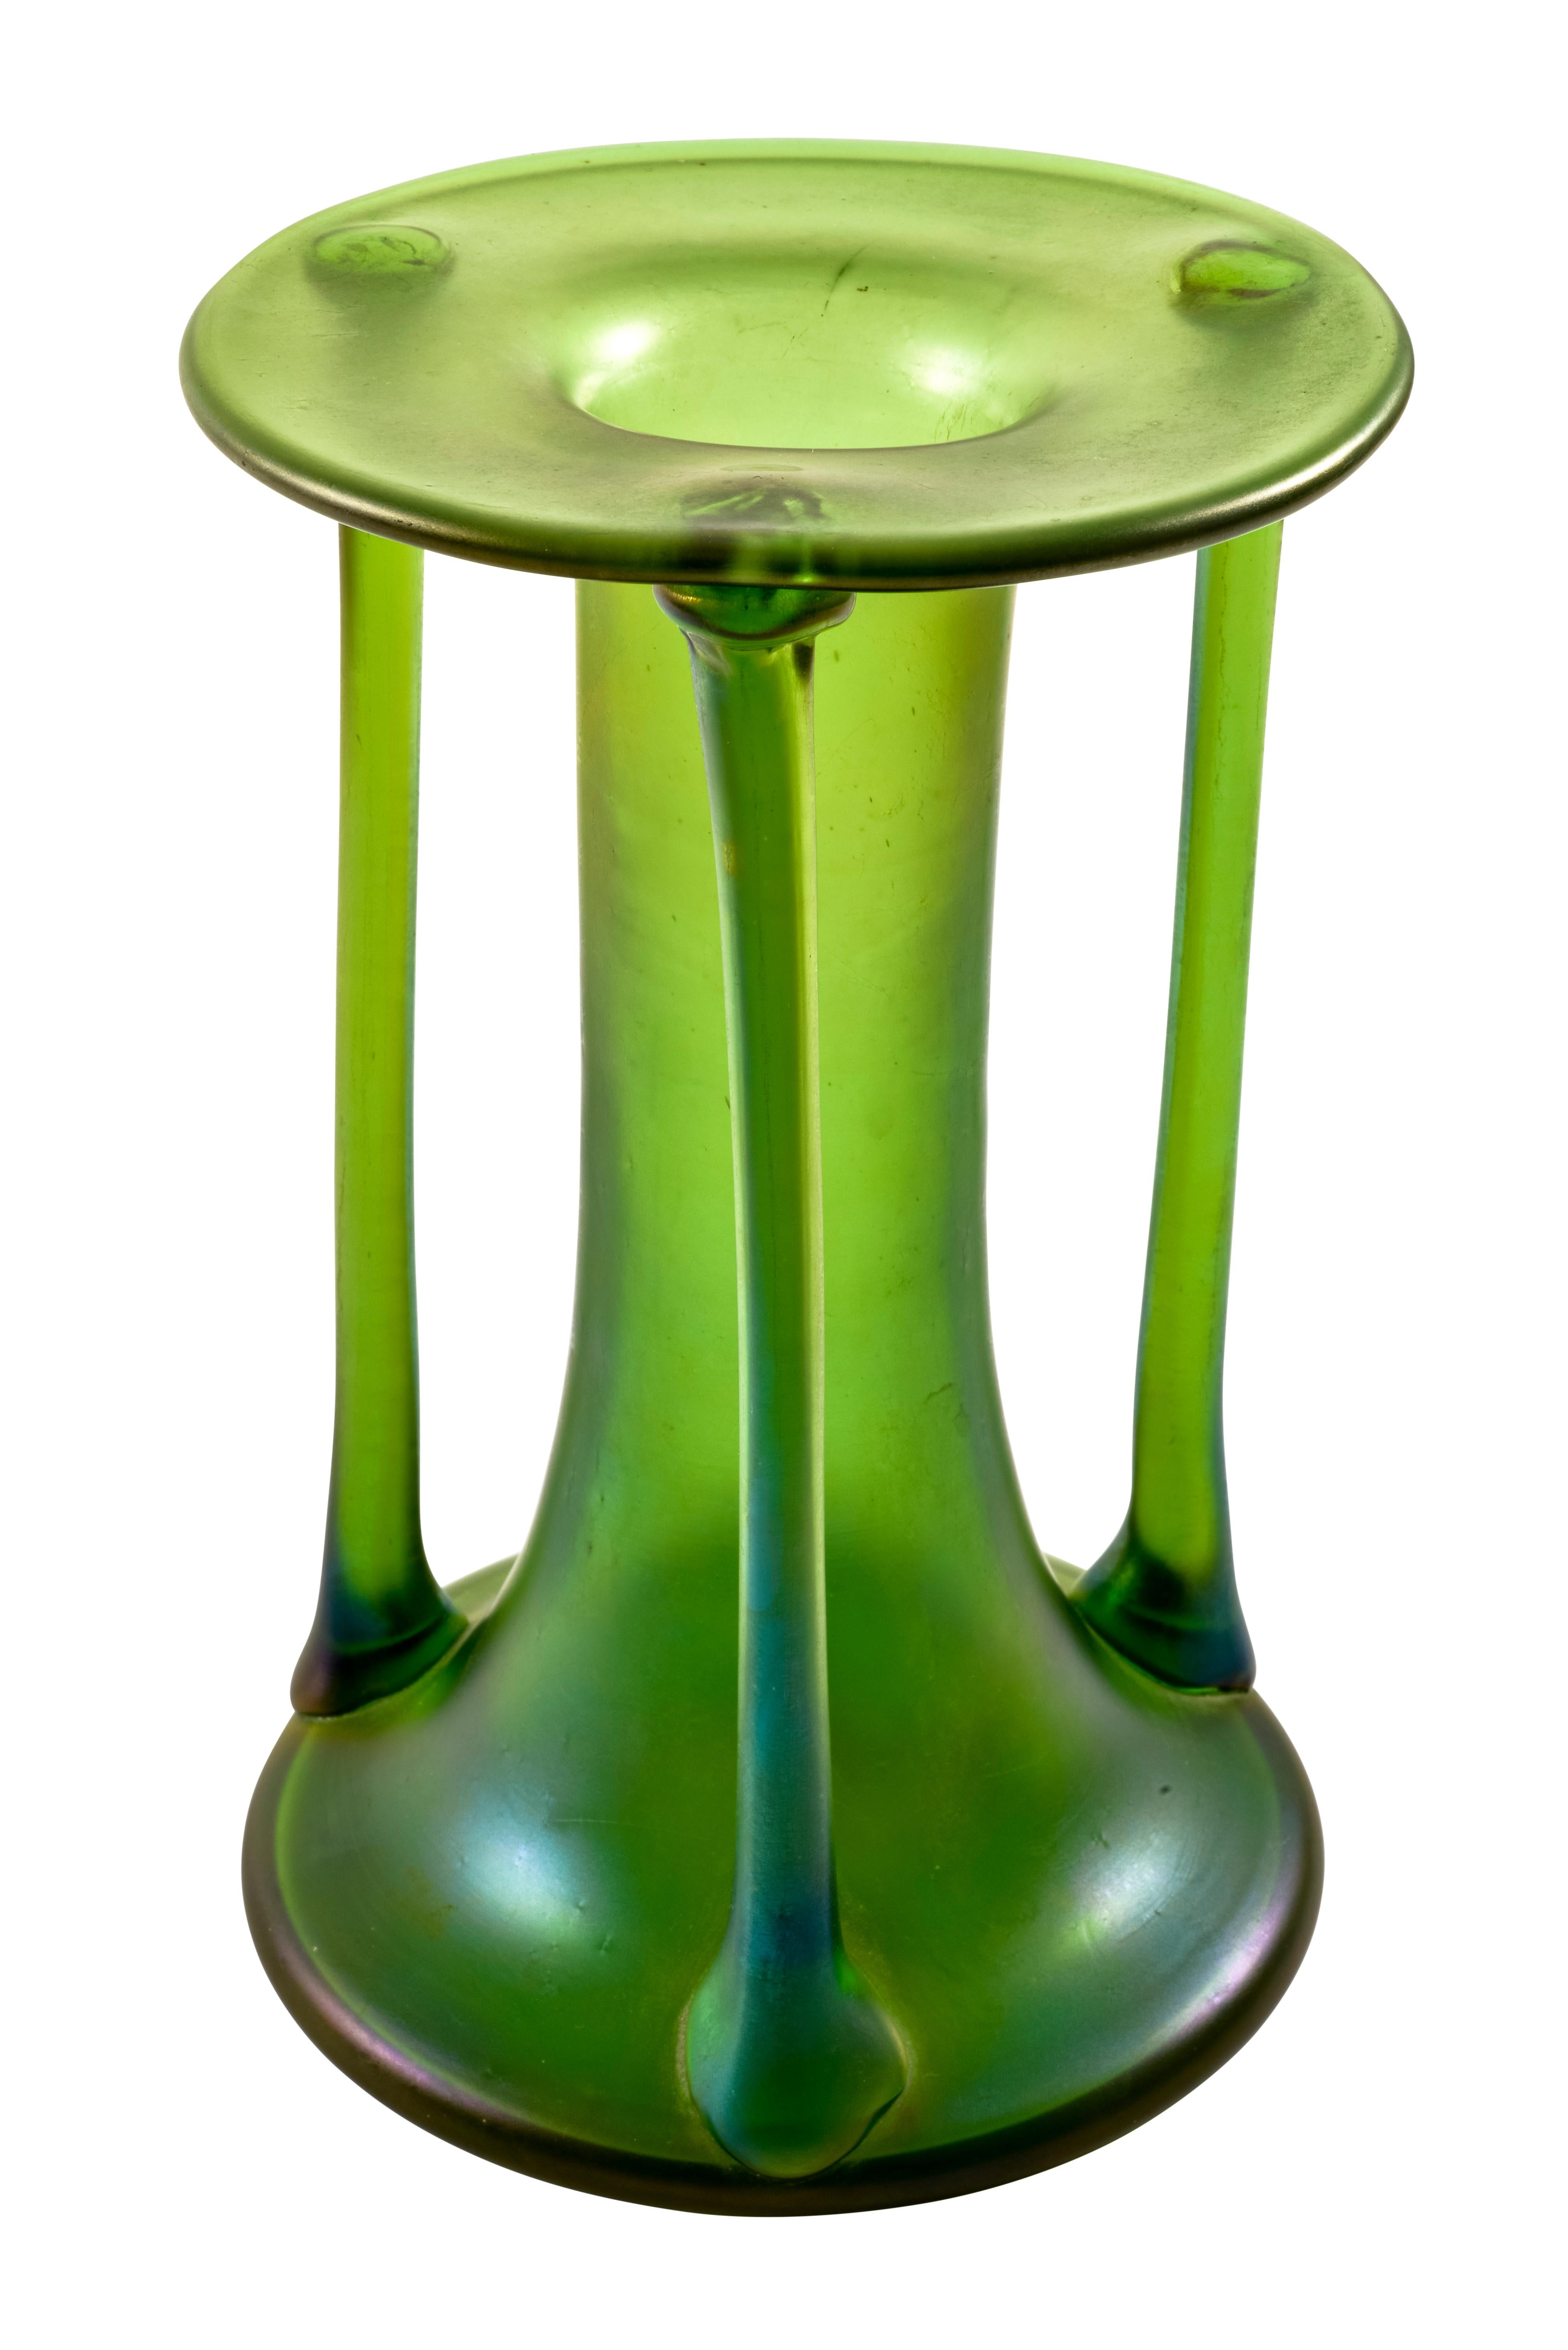 Loetz Glass Vase Austrian Jugendstil Josef Hoffmann 1900 Green In Good Condition For Sale In Vienna, AT